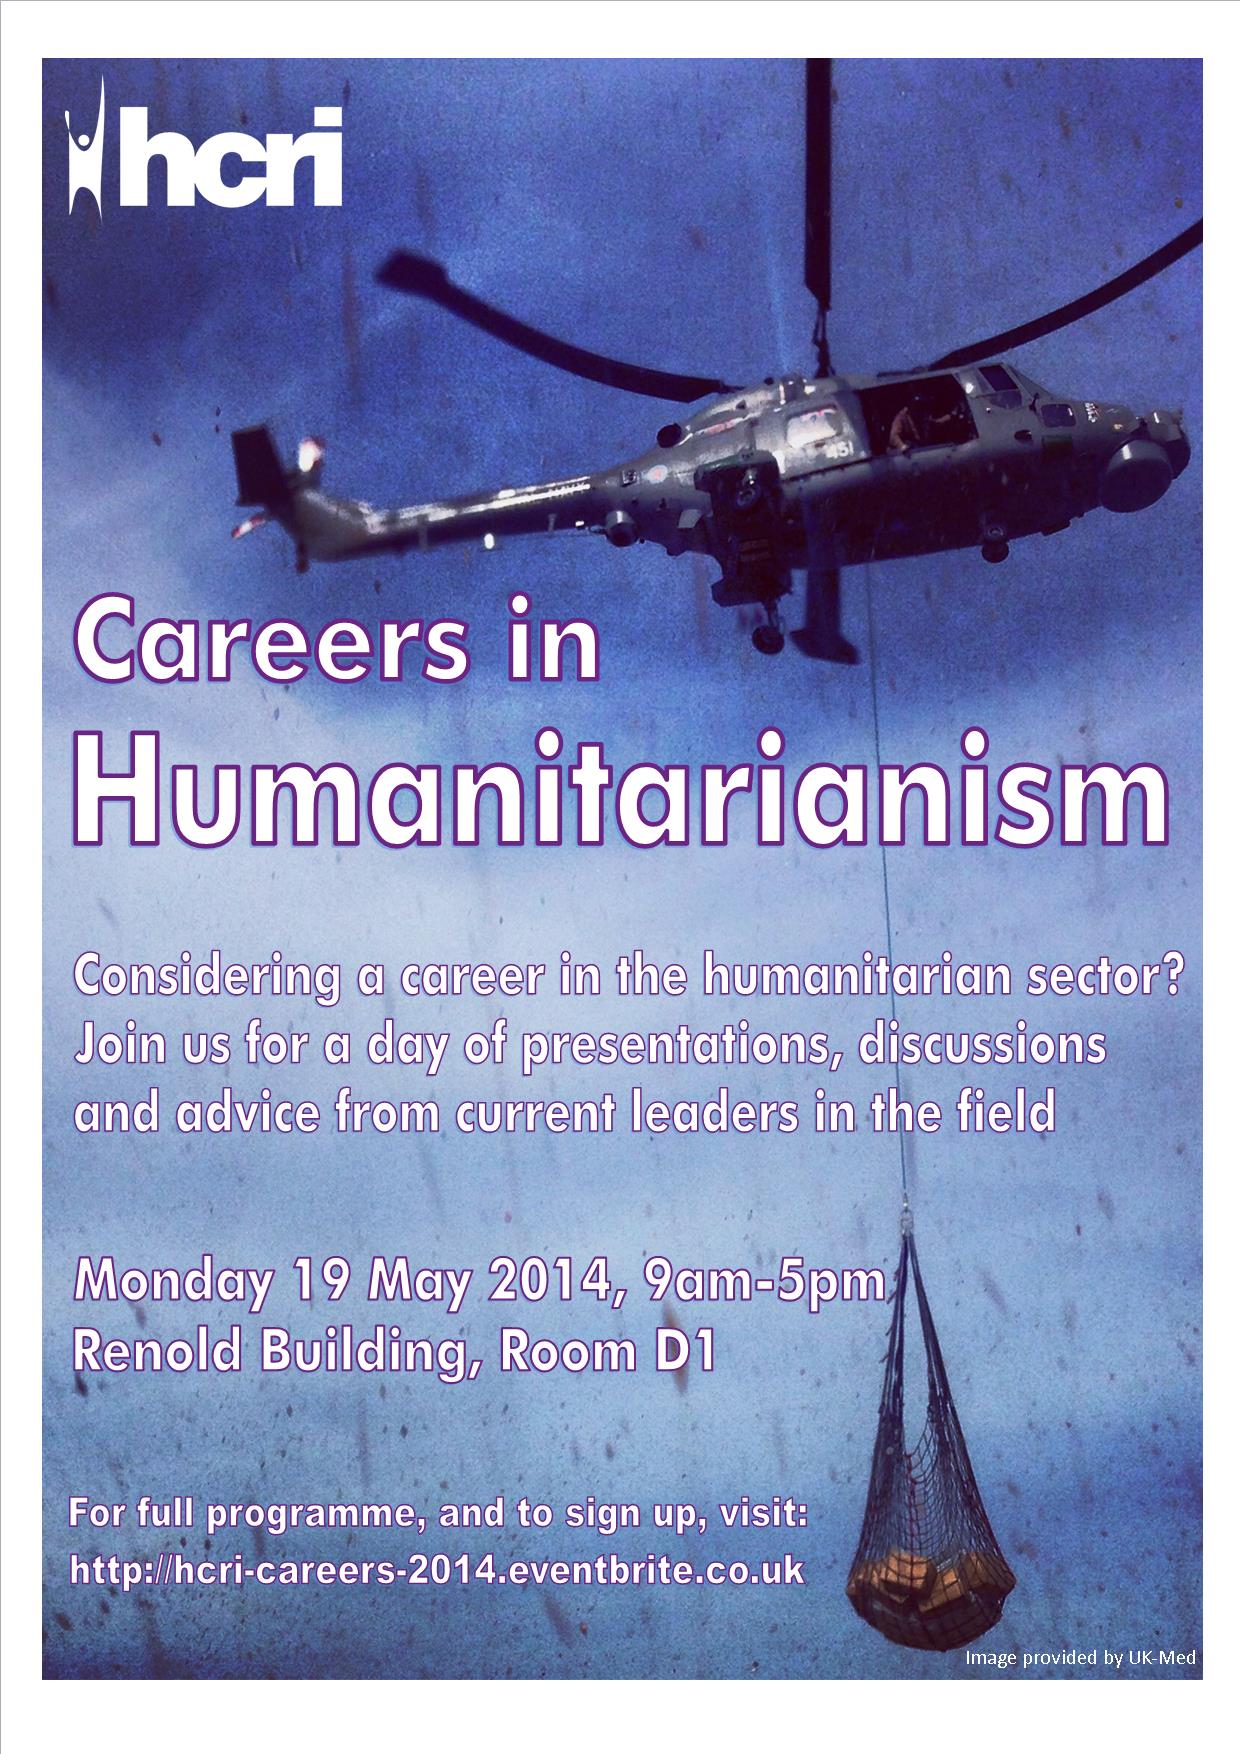 Careers in Humanitarianism Poster, 19 May 2014